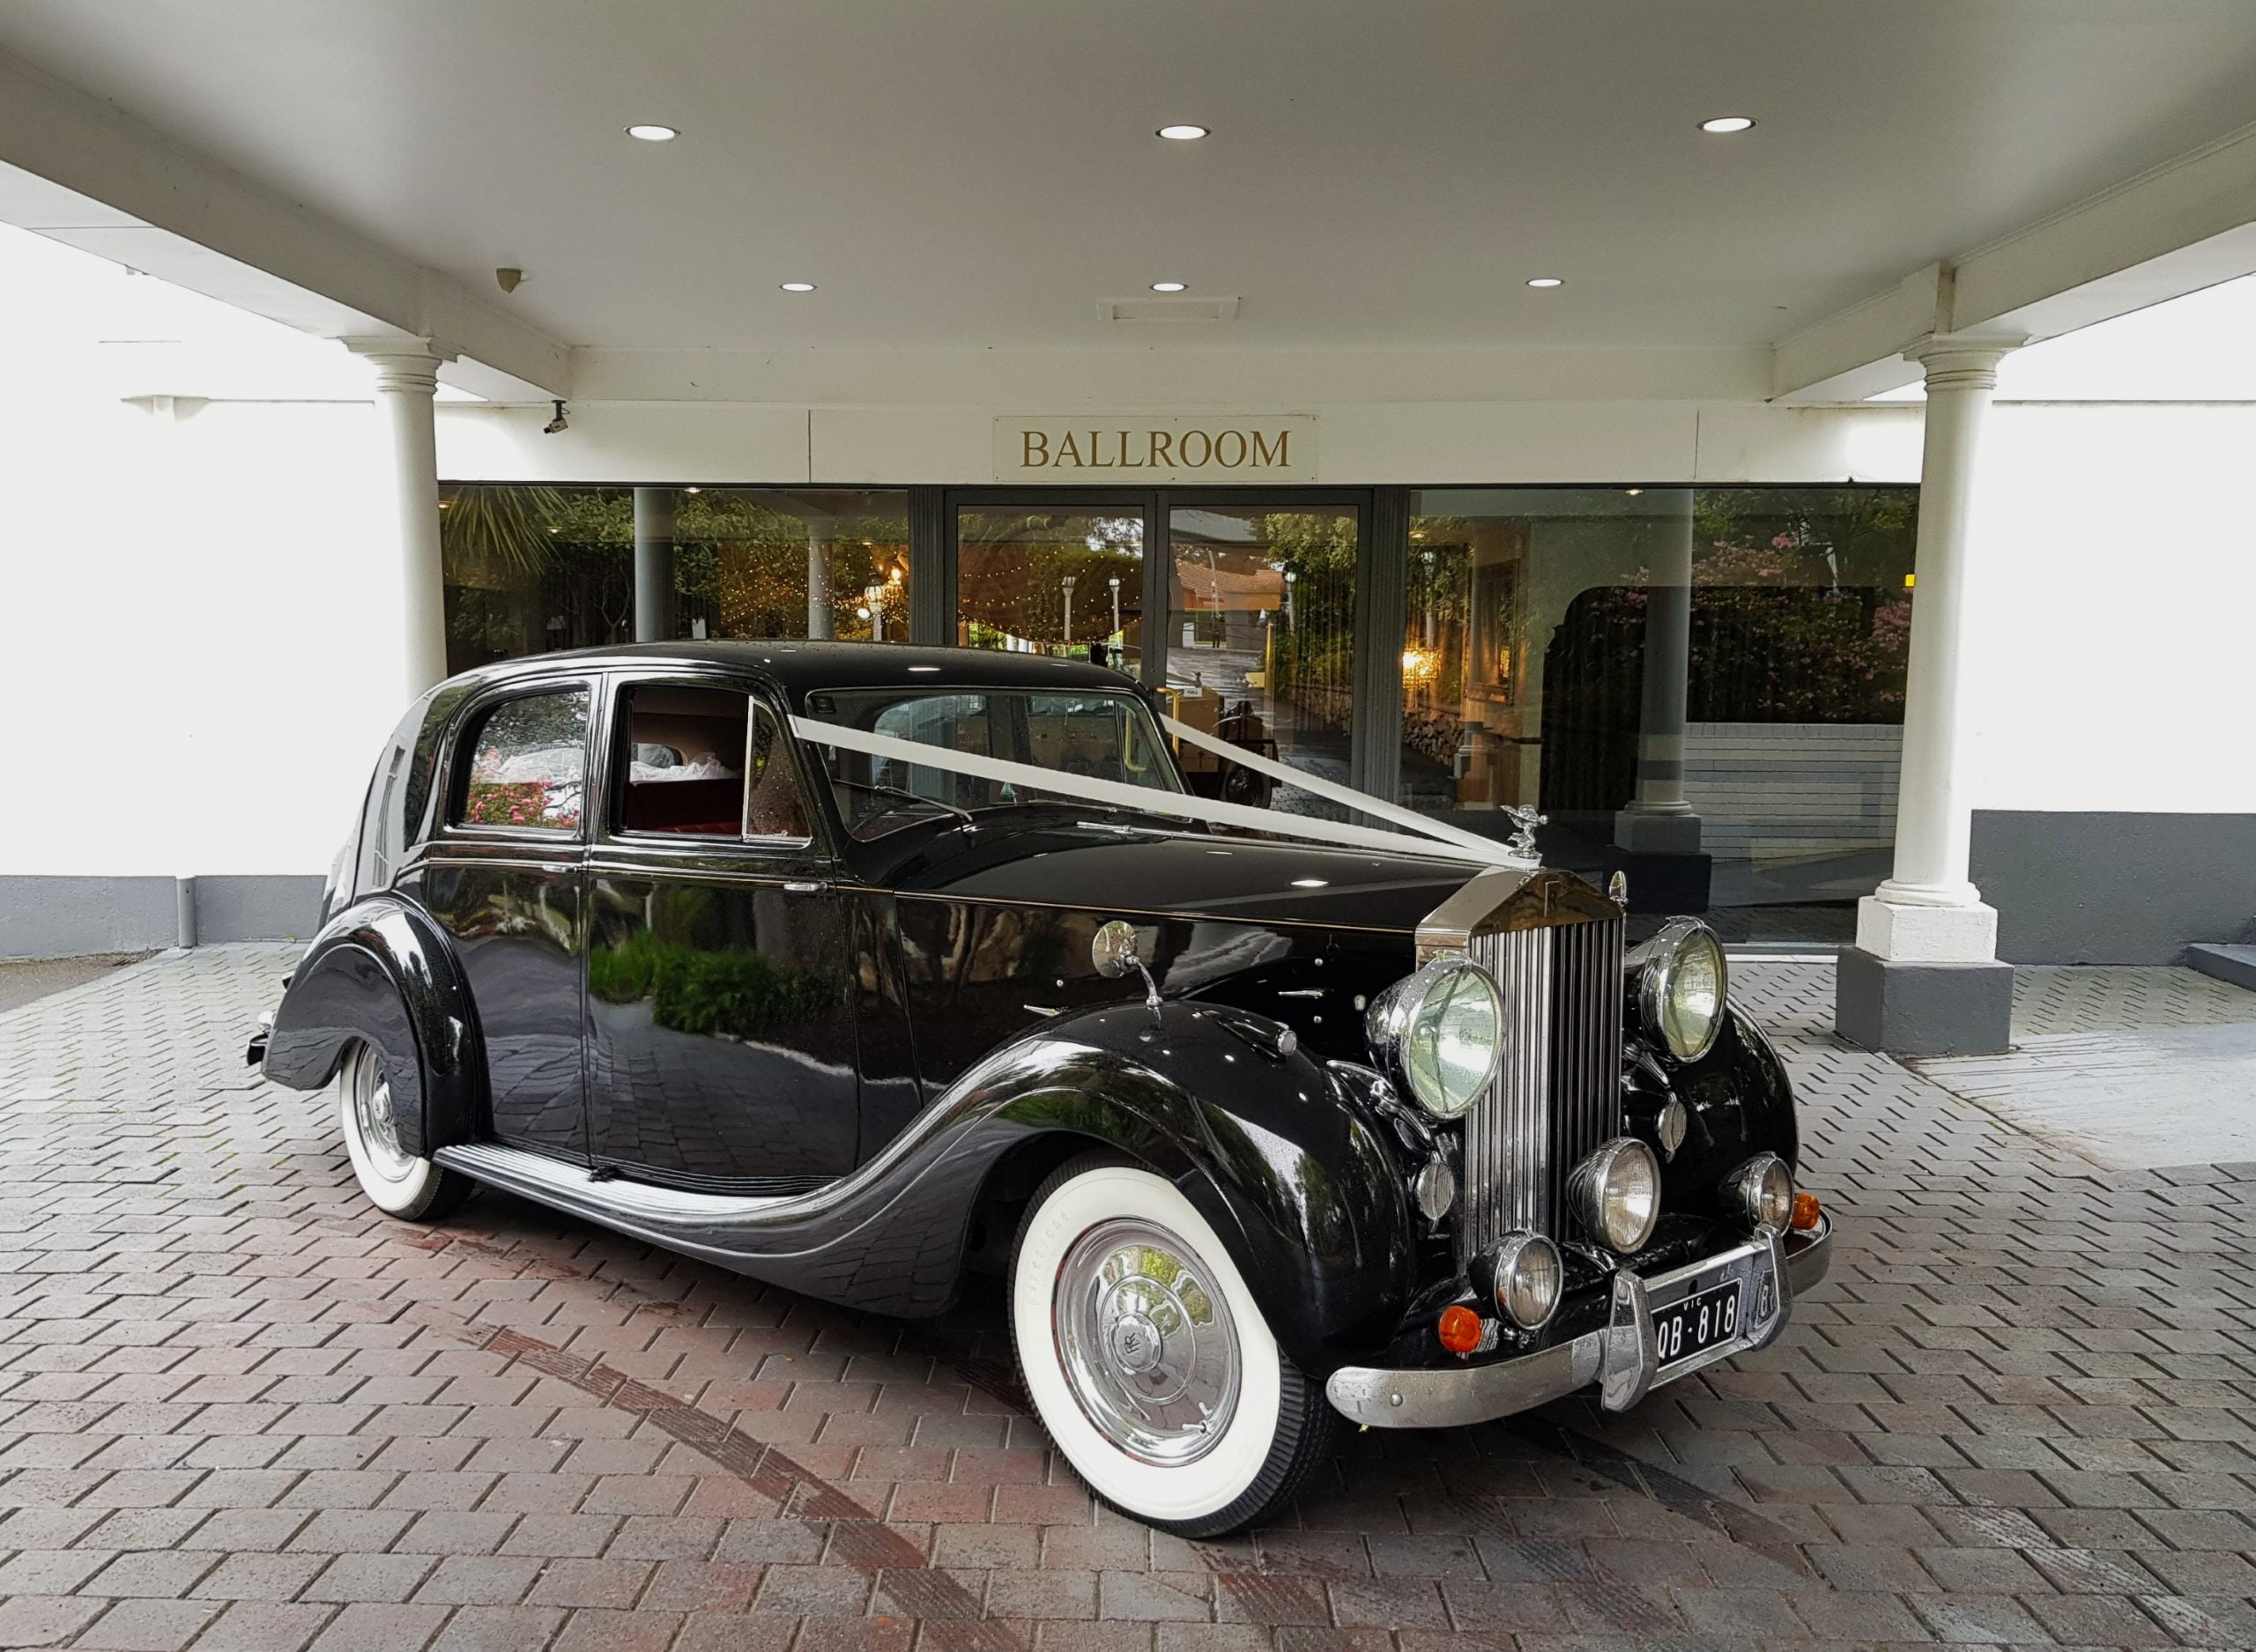 1947 Rolls Royce Wraith(BLACK) at Linley Estate ballroom